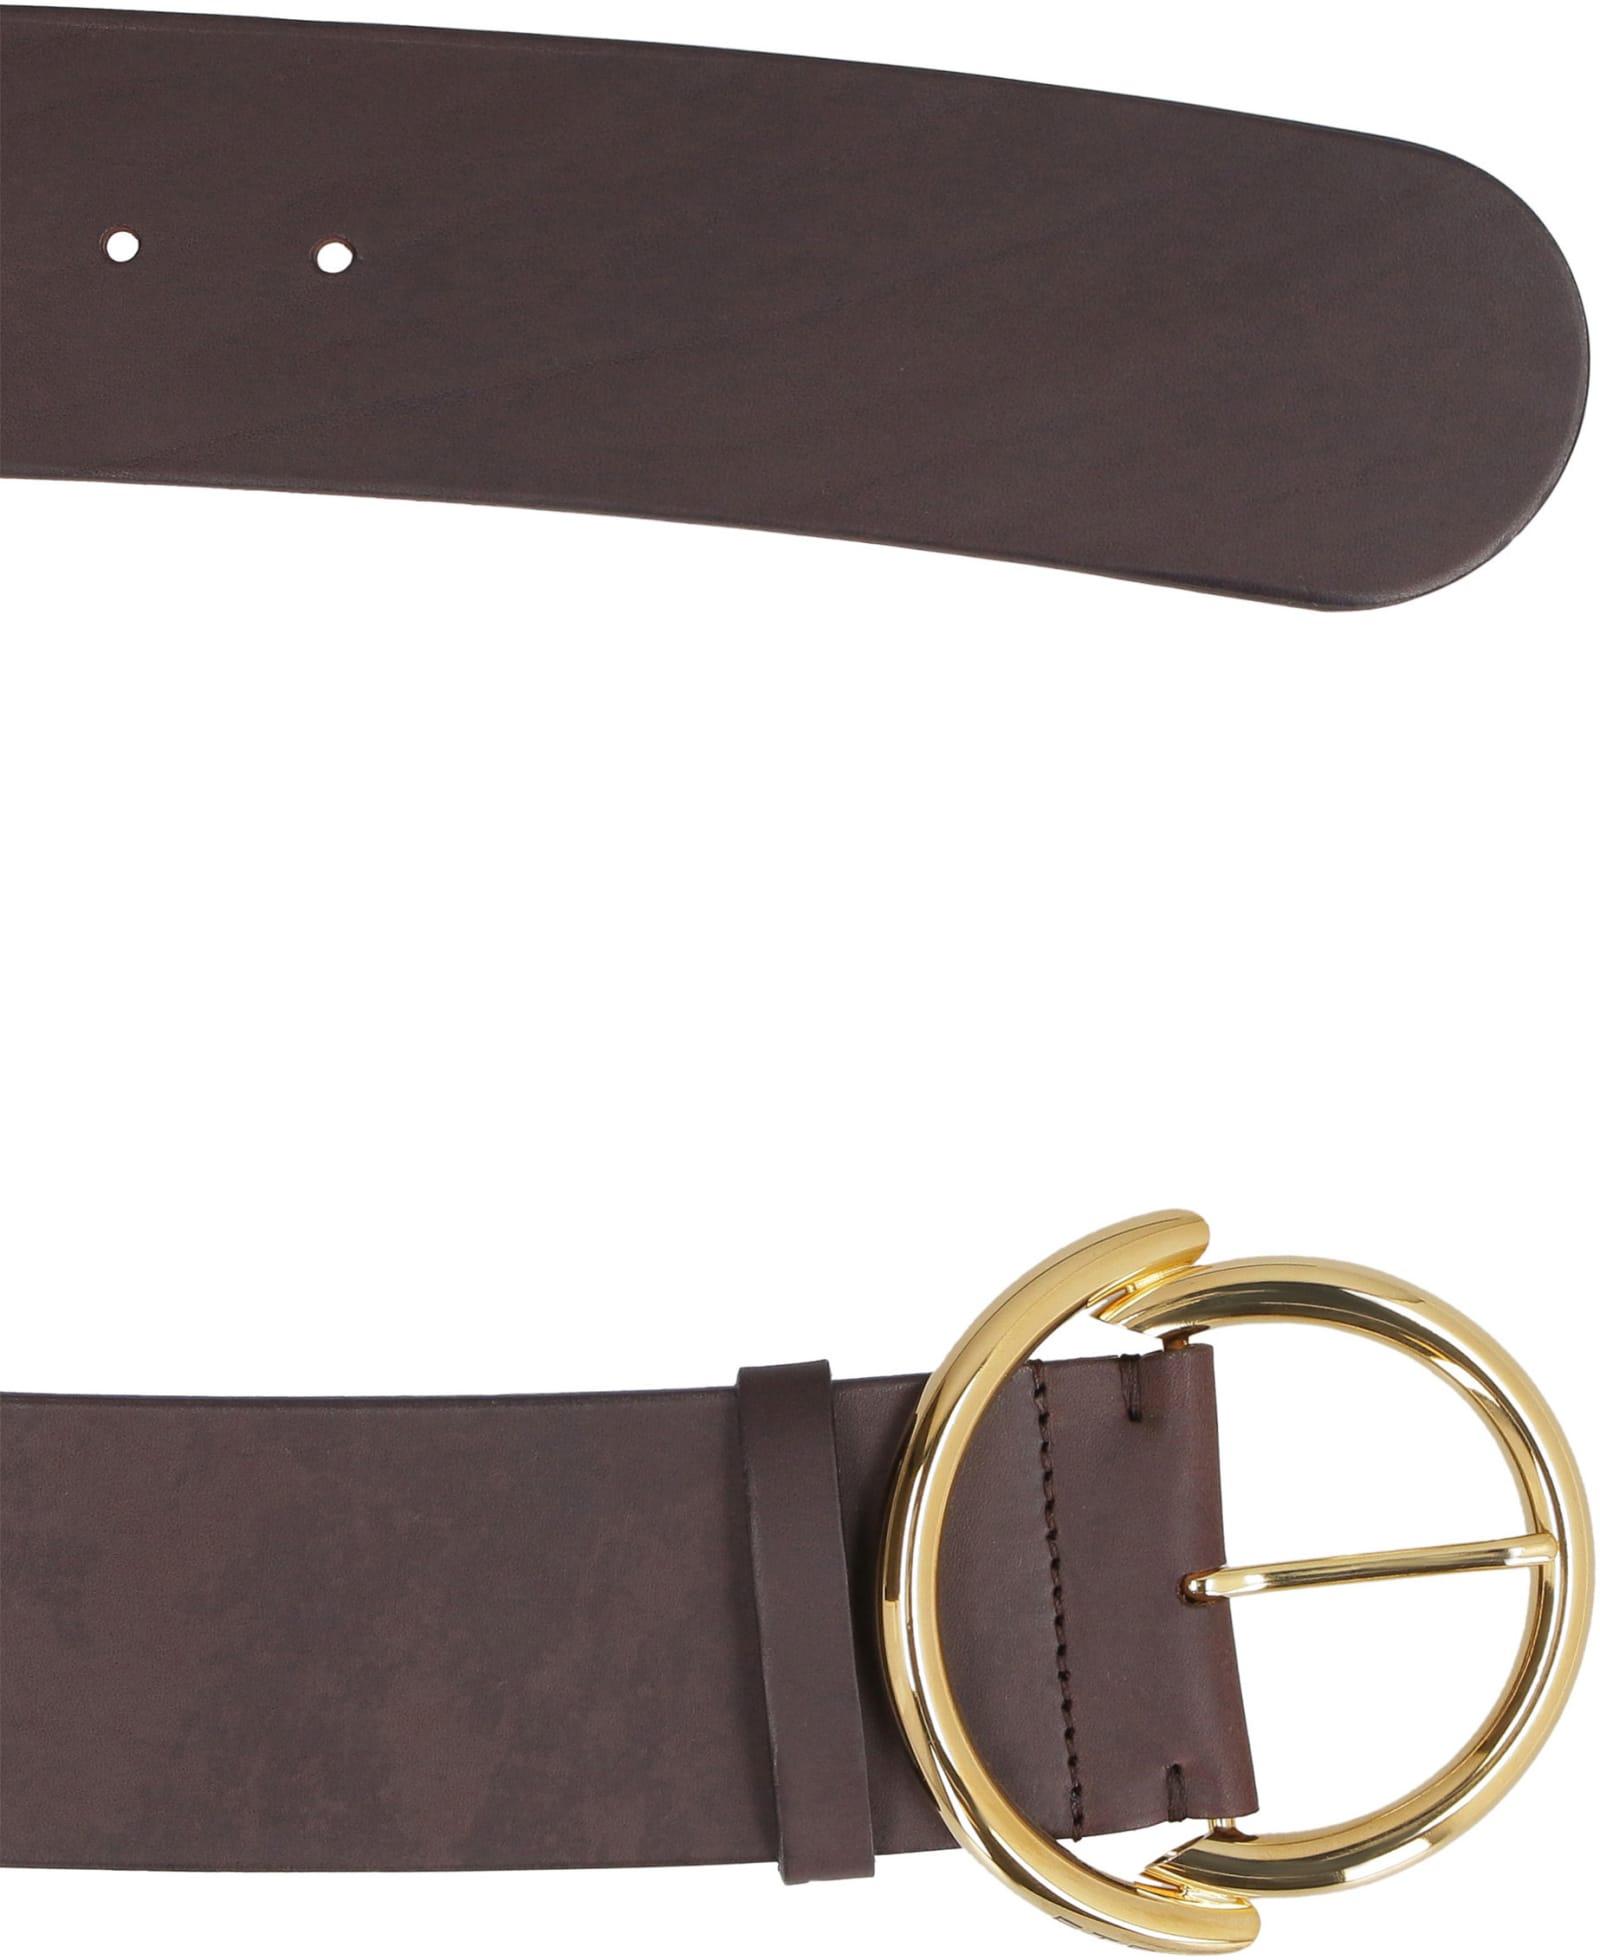 Etro Gold-Buckle Leather Belt